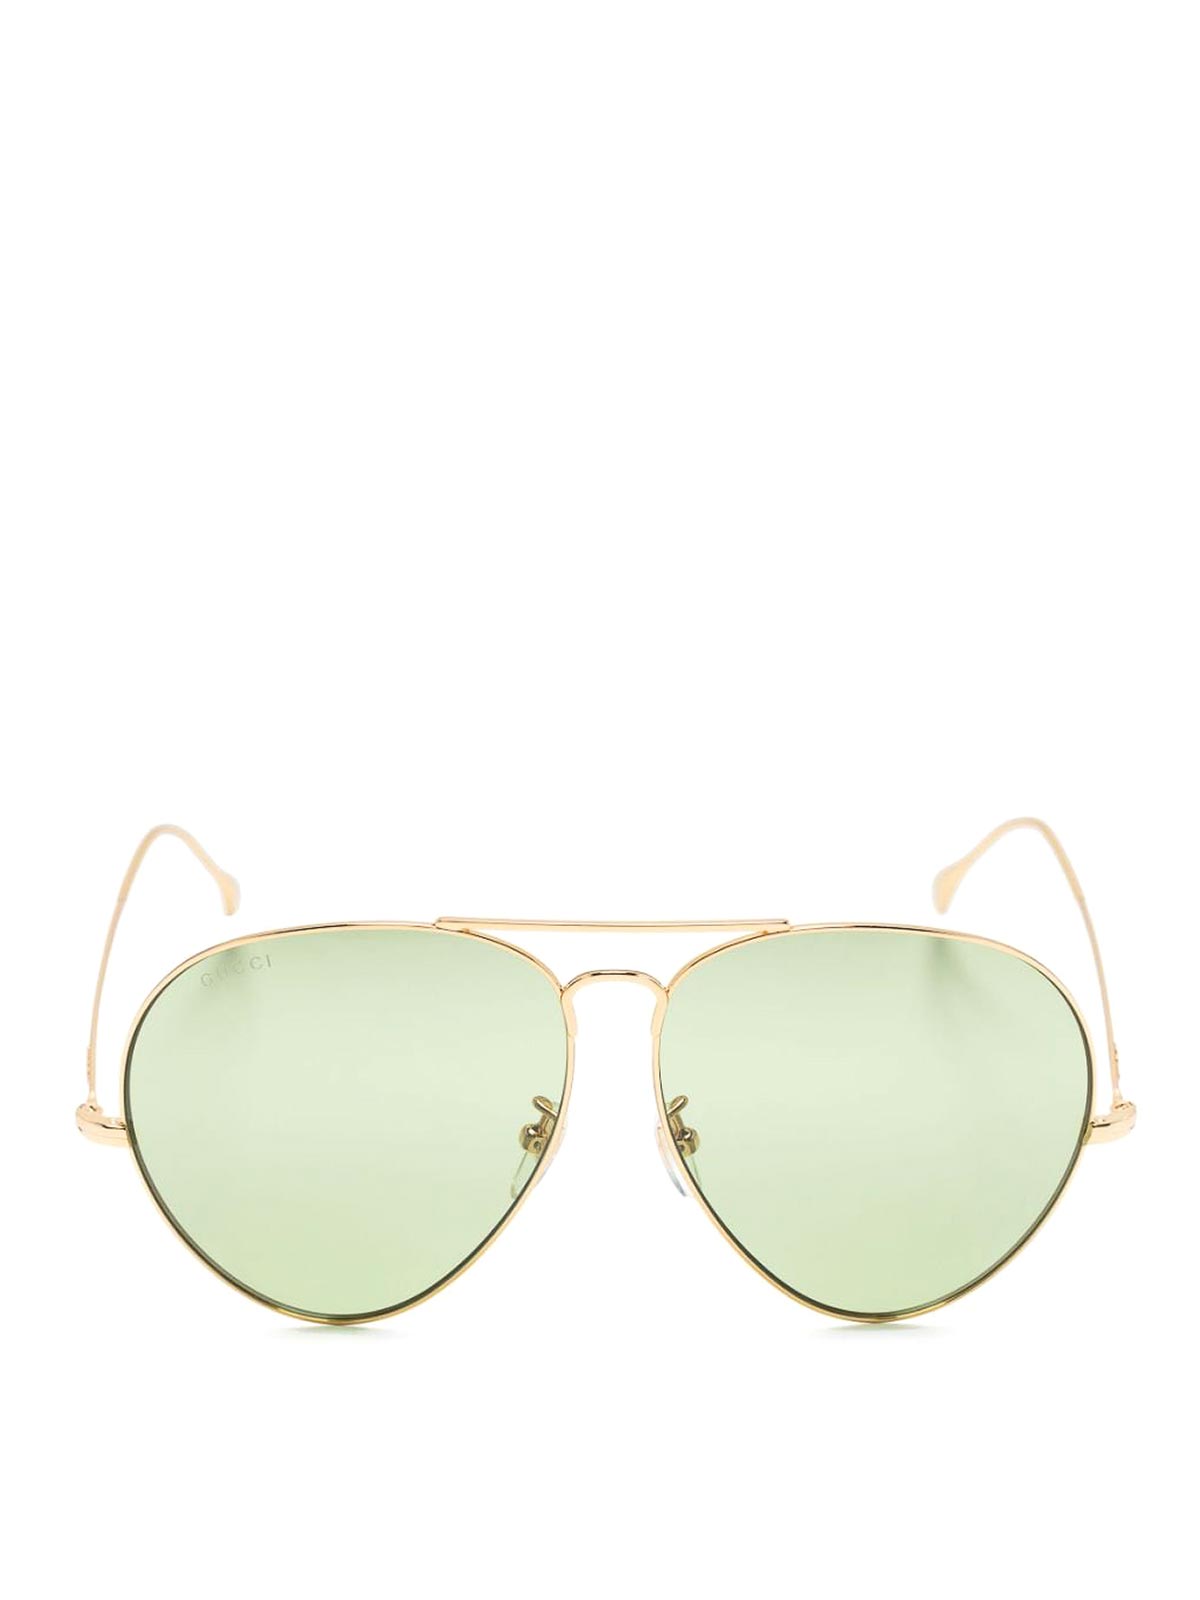 Gucci Eyeglasses In Green